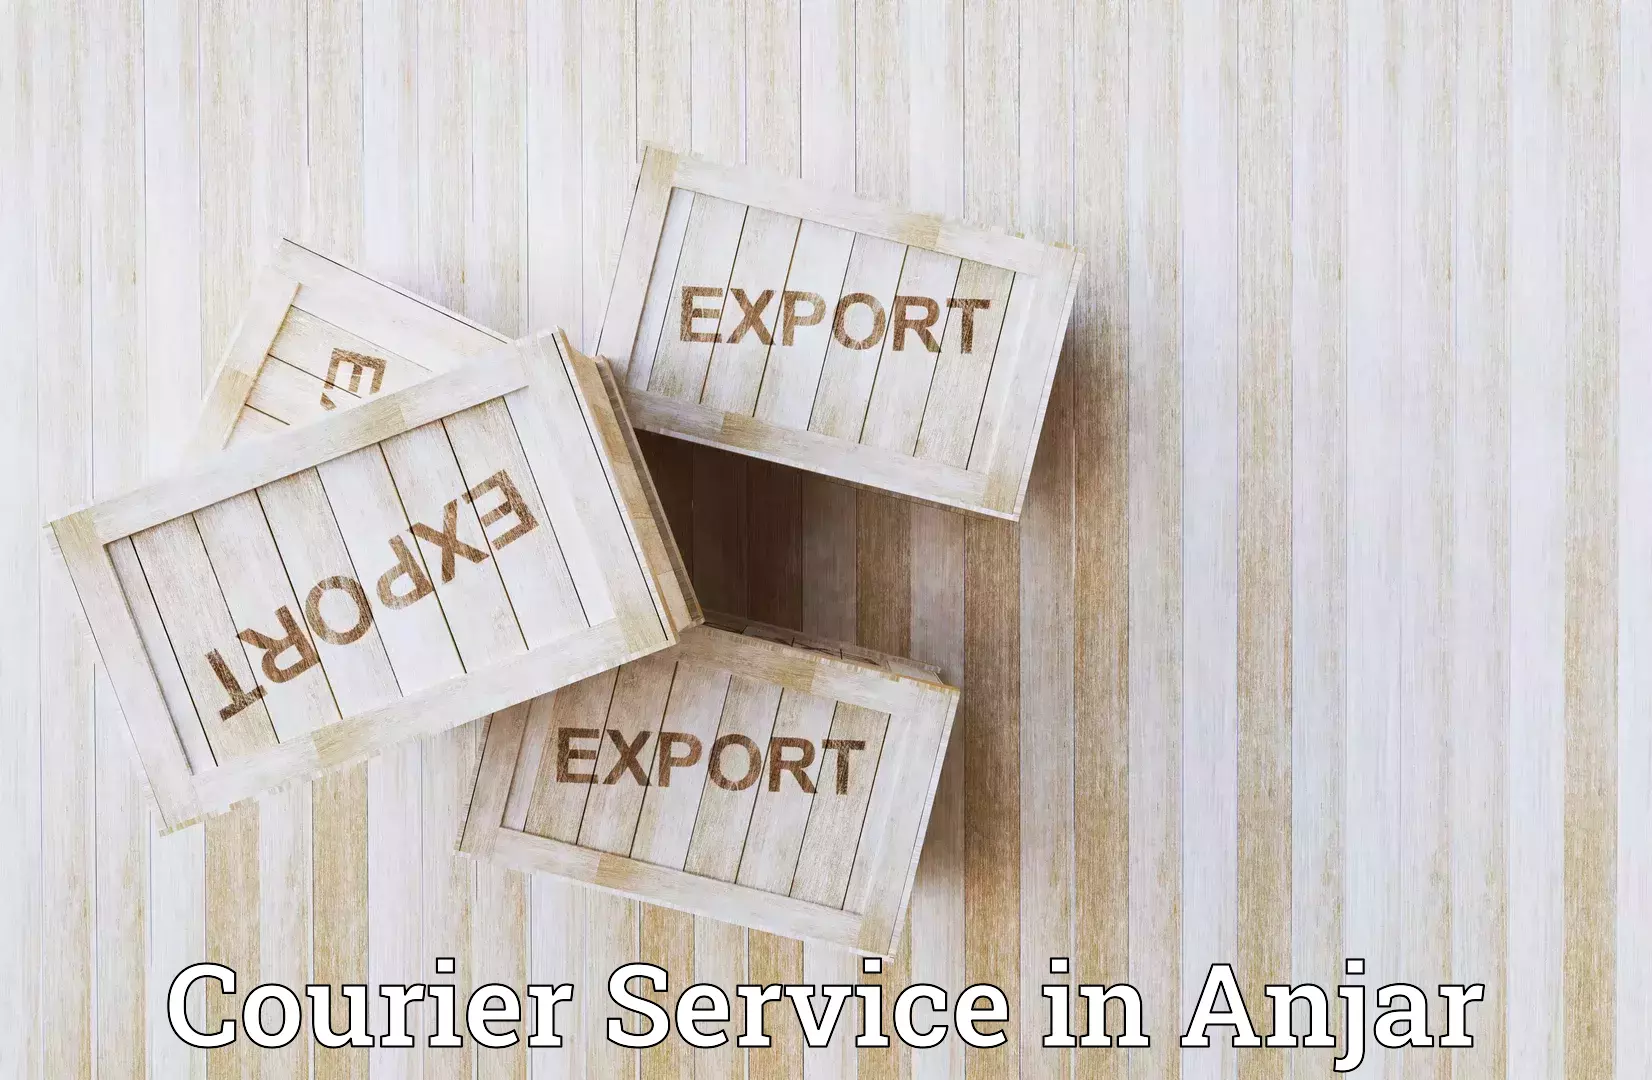 Courier service comparison in Anjar